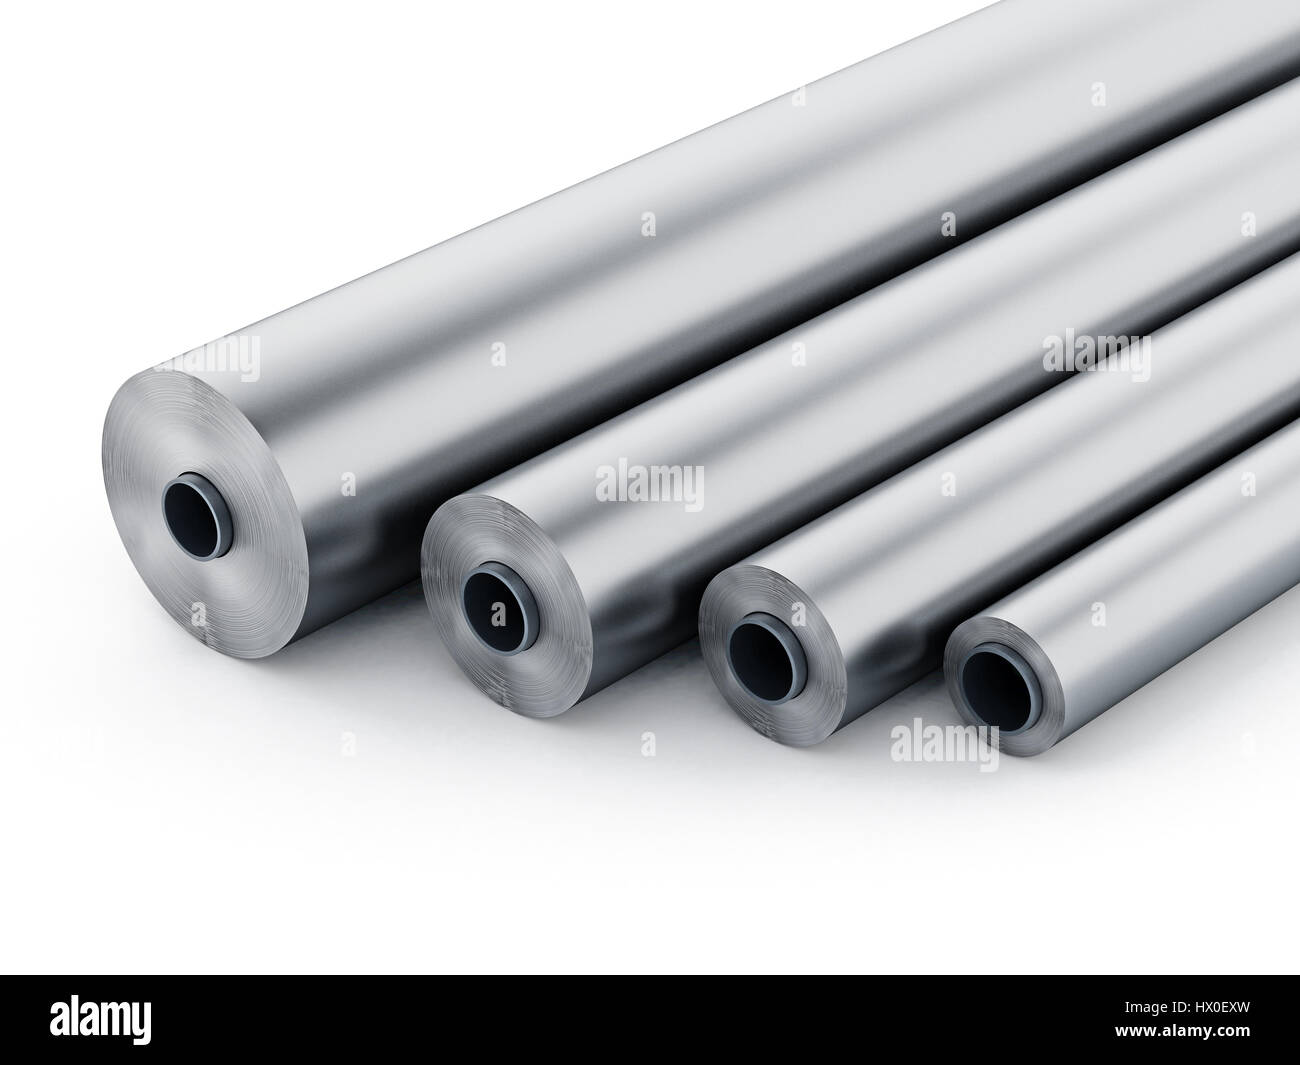 Aluminio para usos eléctricos fotografías e imágenes de alta resolución -  Alamy